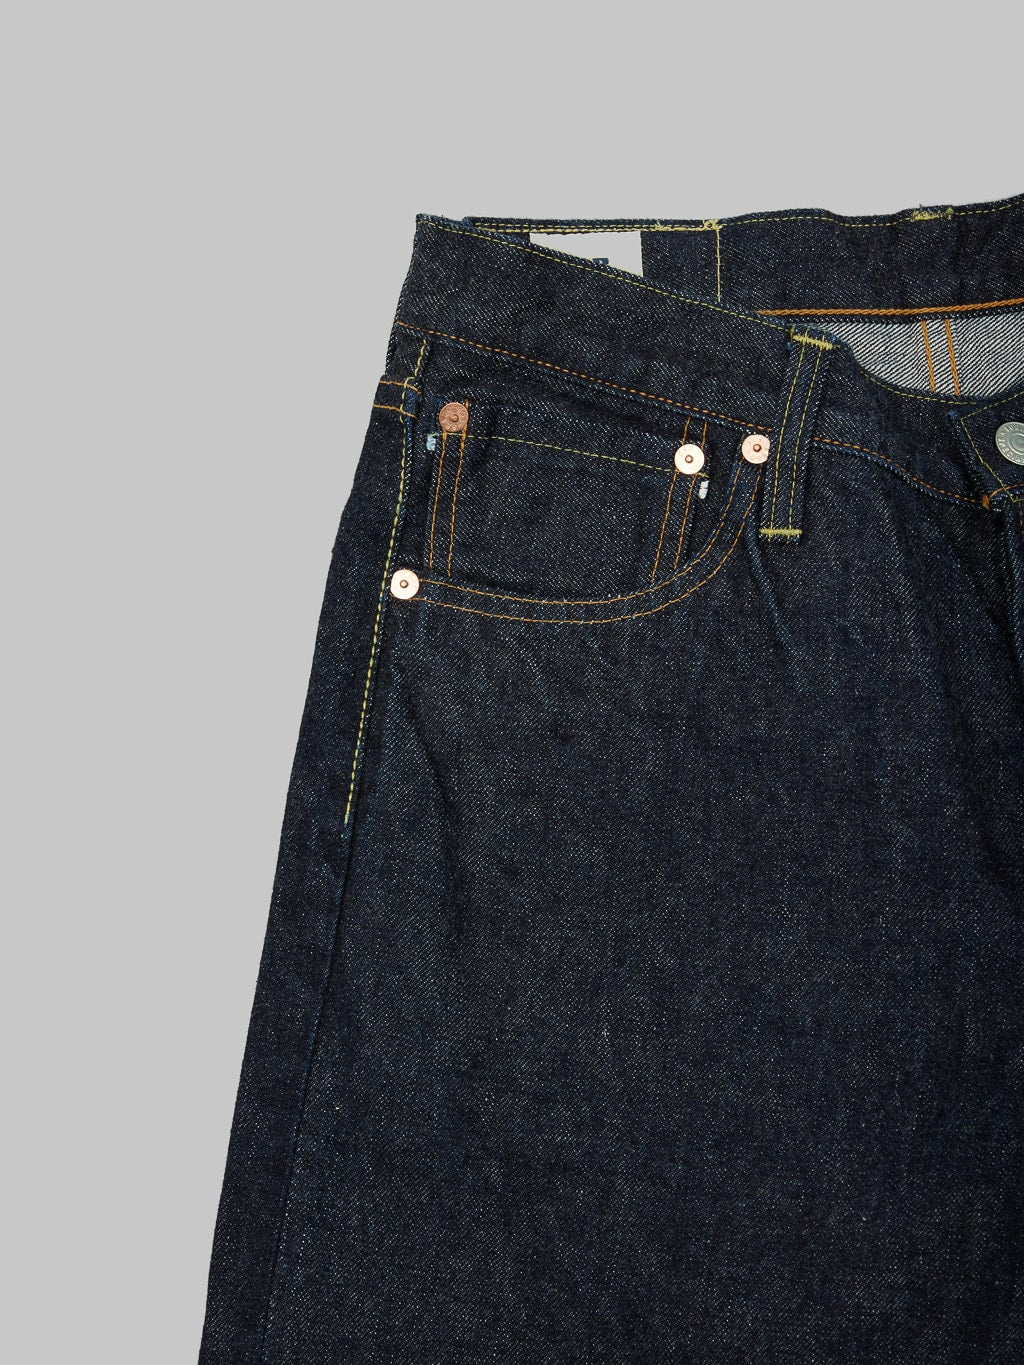 Fob factory slim straight denim jeans front pocket